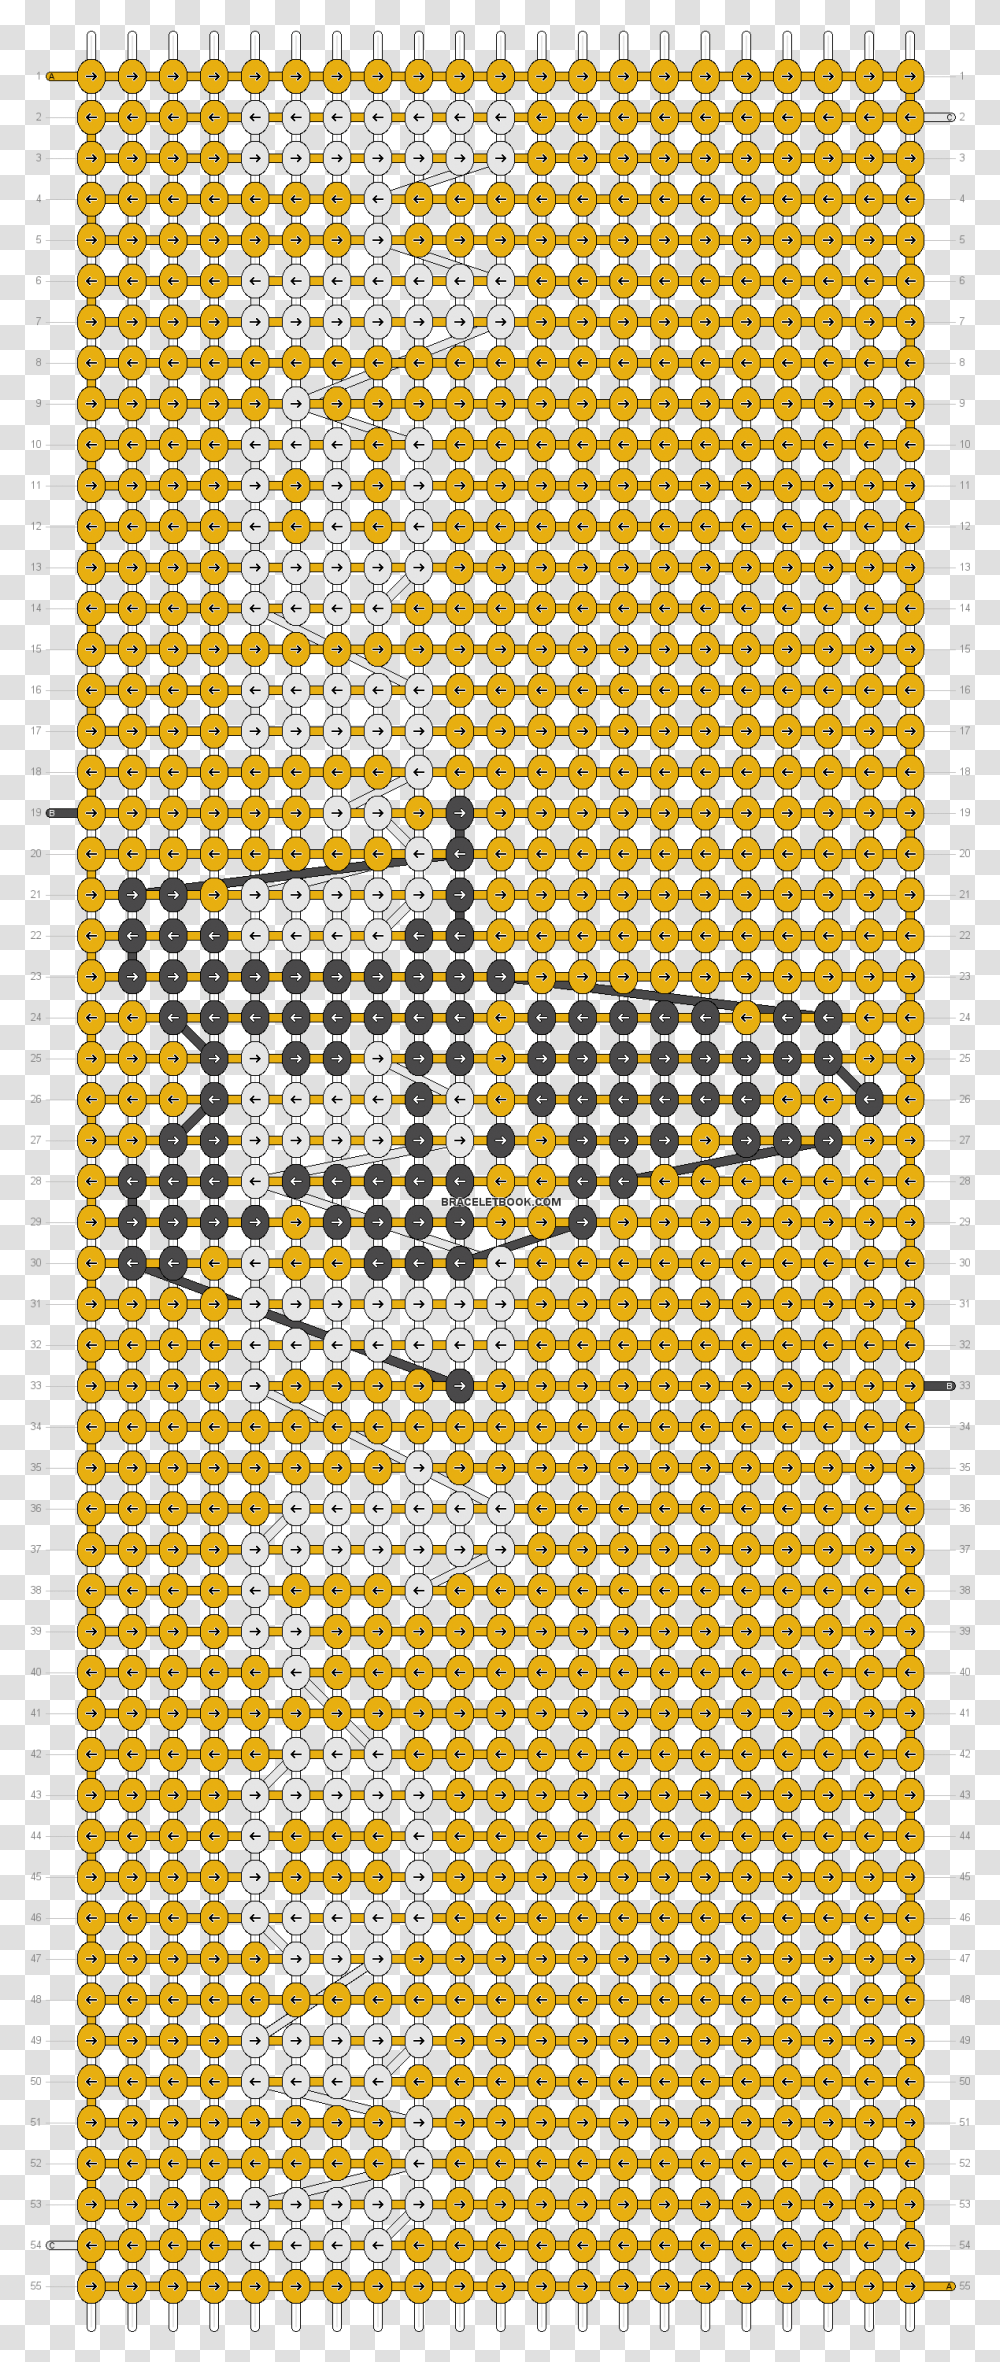 Alpha Pattern Snoopy Friendship Bracelet Pattern, Texture, Grille Transparent Png